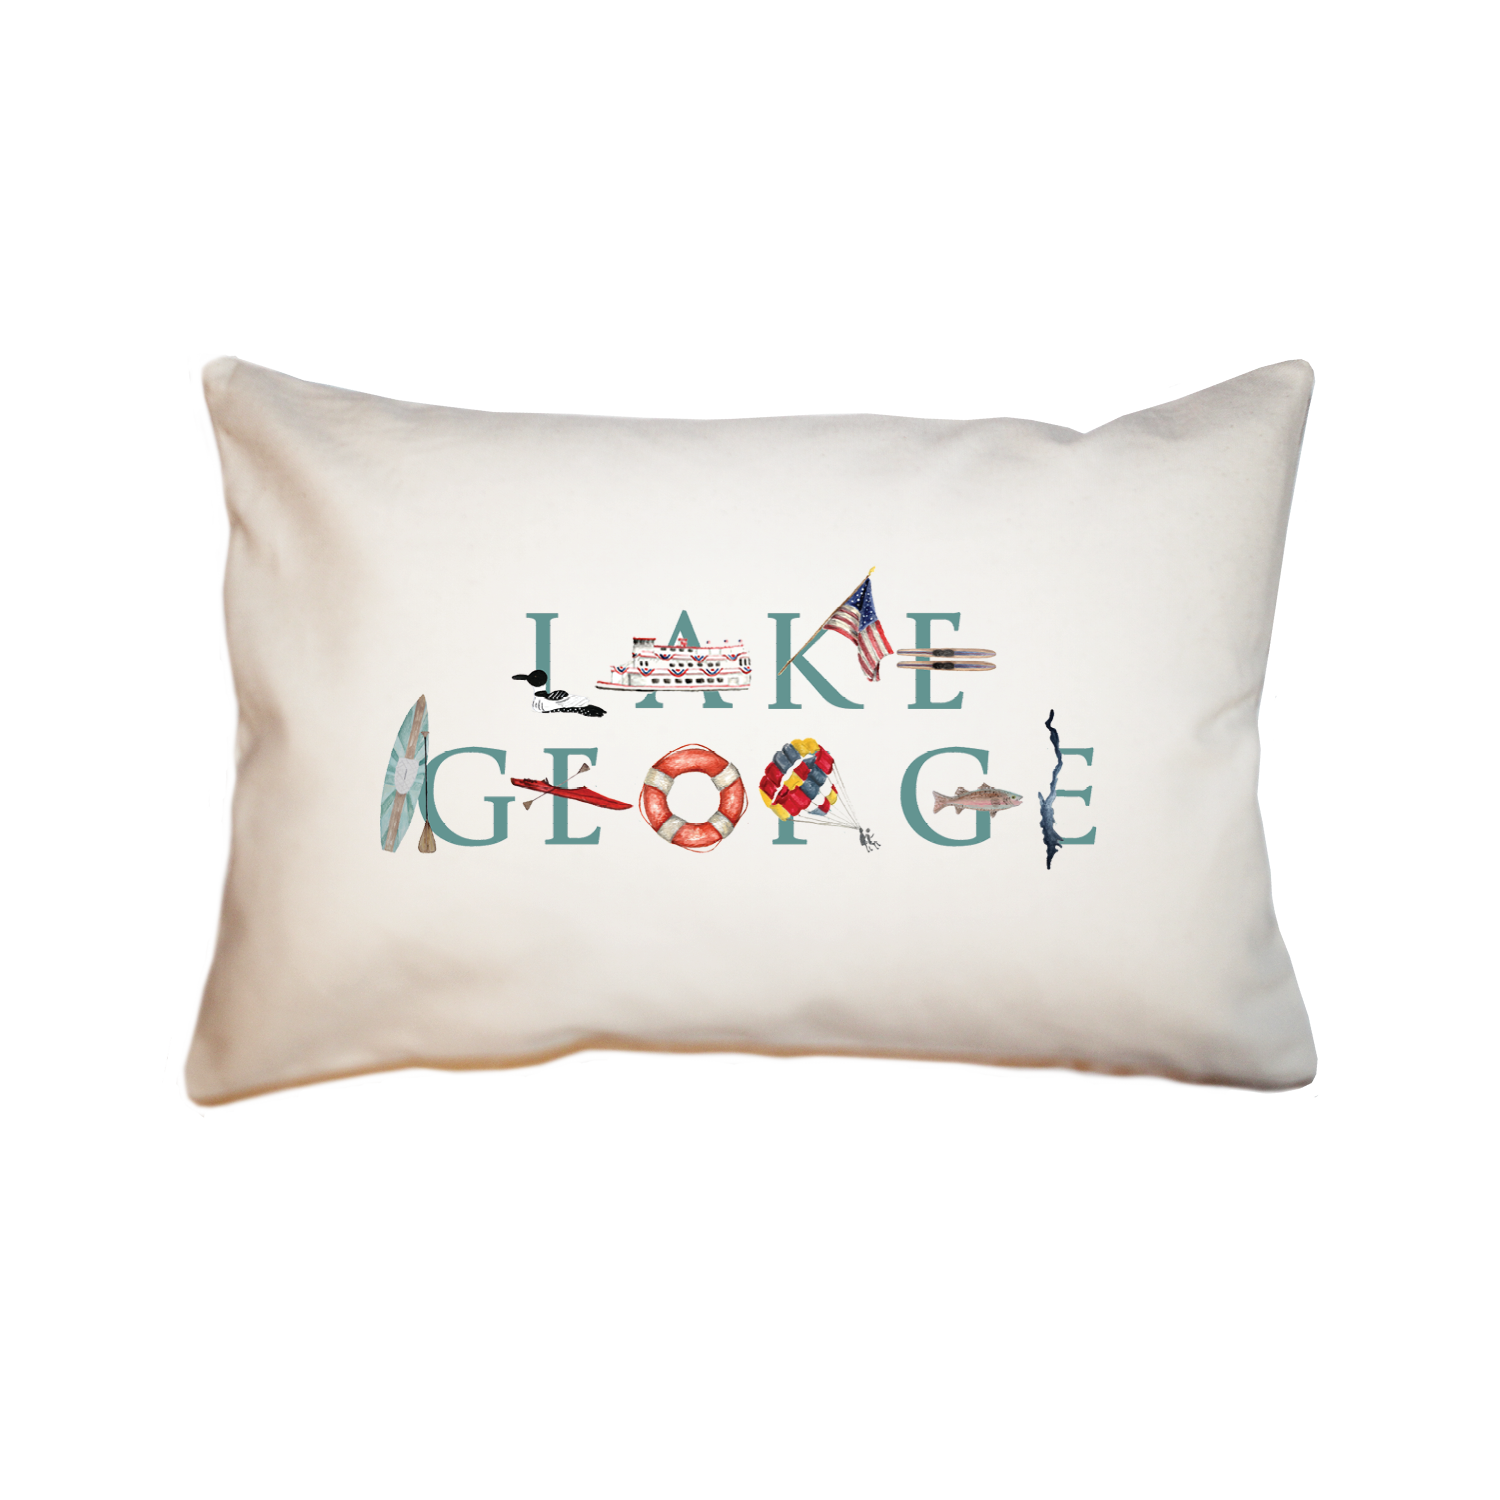 Lake George large rectangle pillow